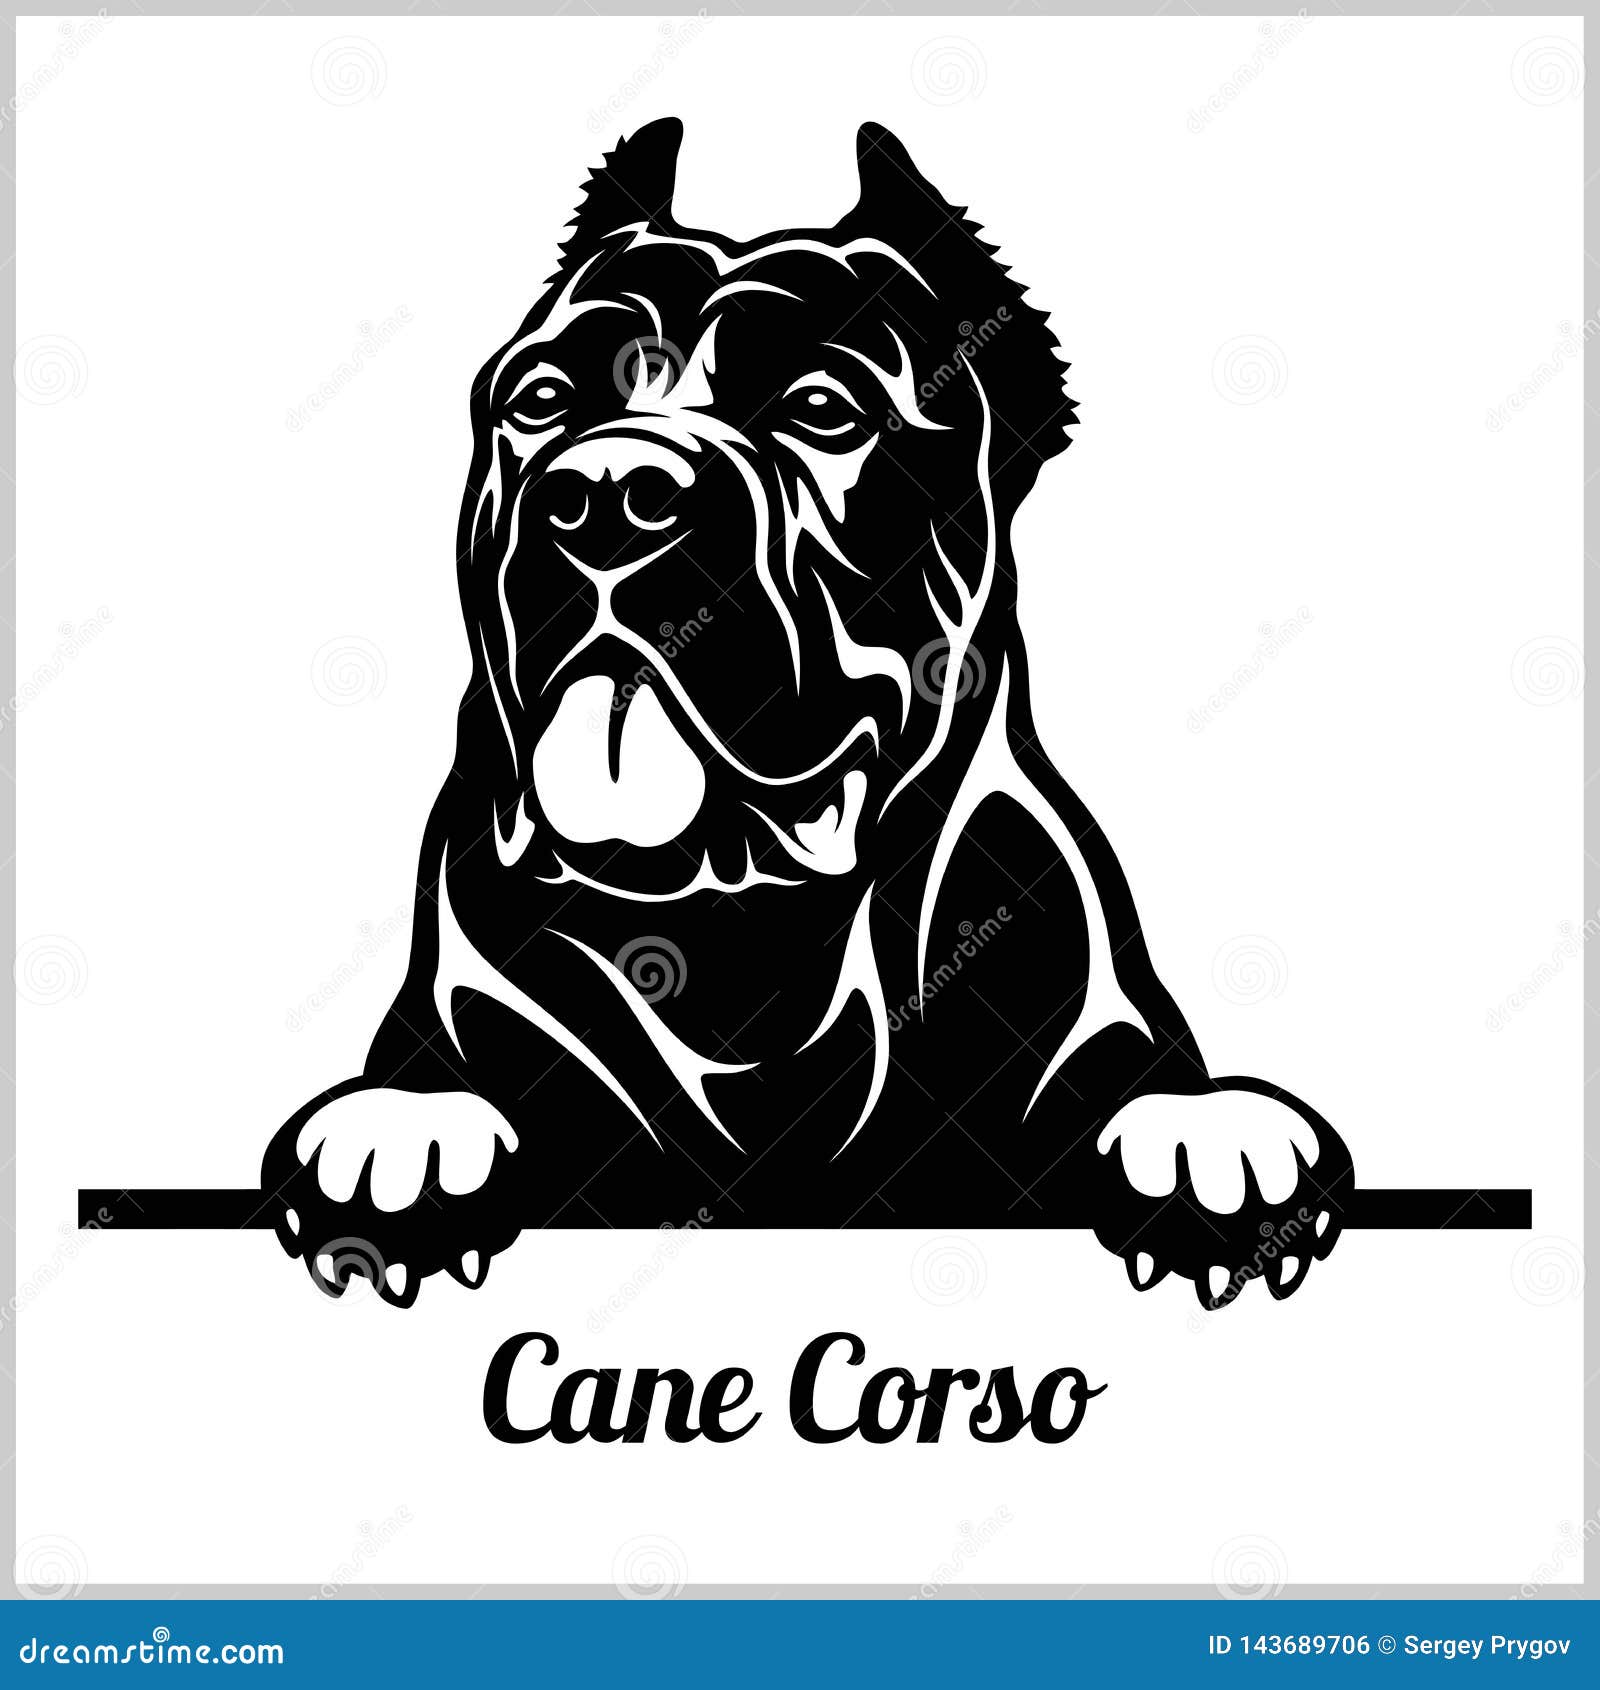 cane corso - peeking dogs - breed face head  on white